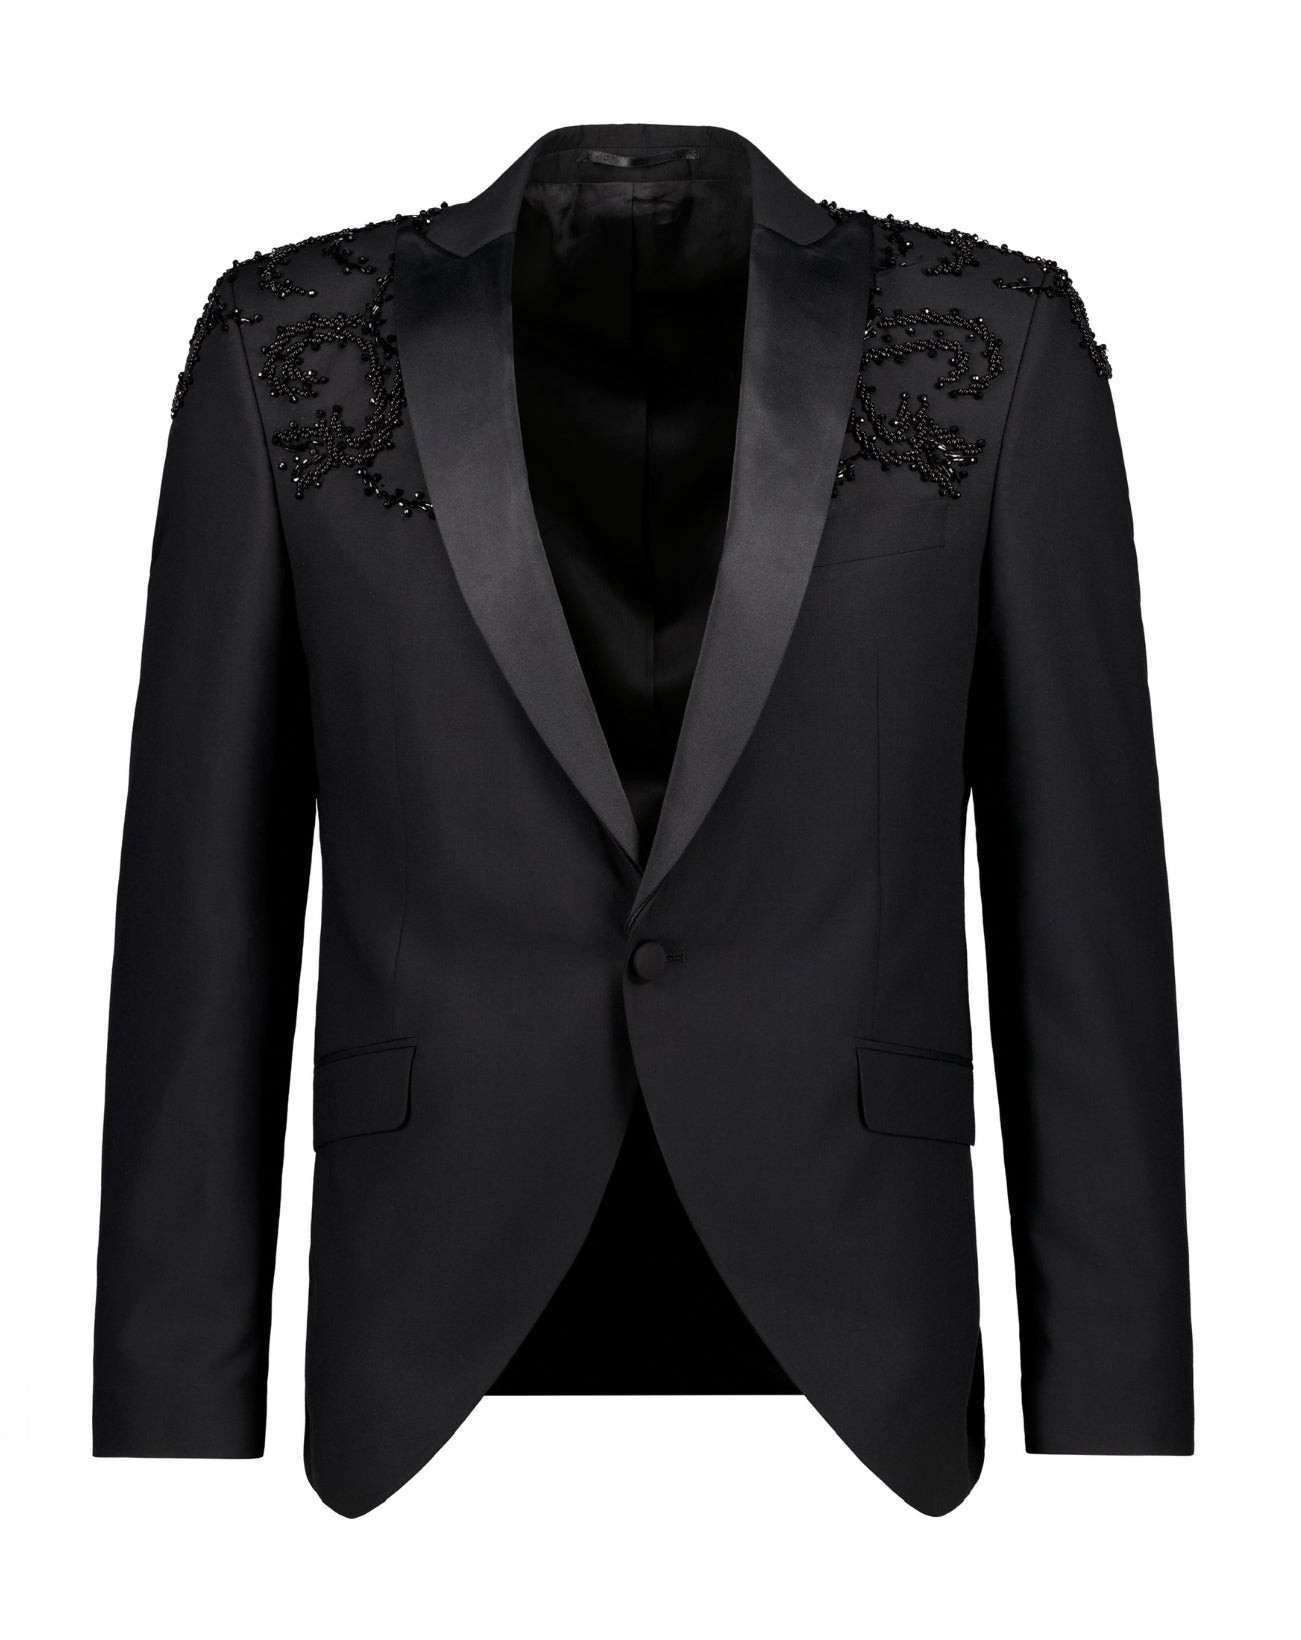 The Falconi Ceremony Suit - Suit by Urbbana